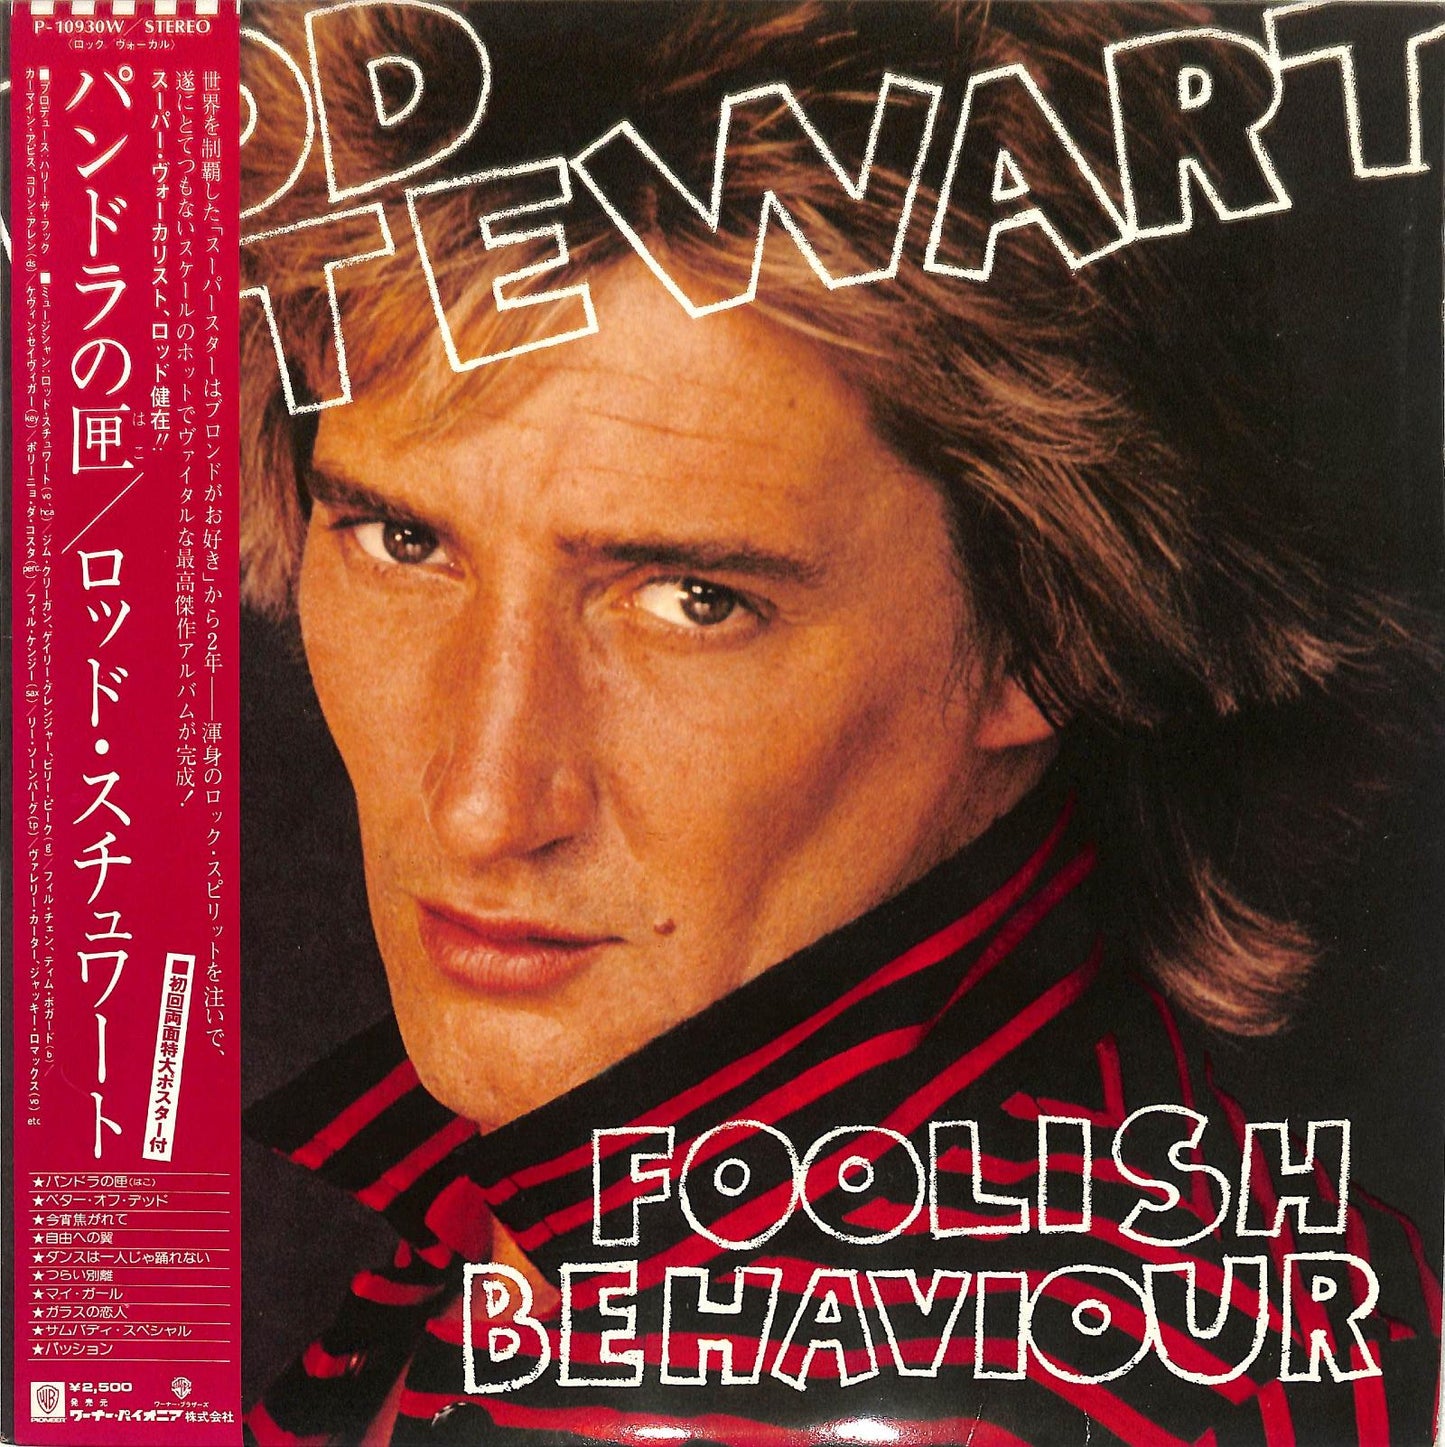 ROD STEWART - Foolish Behaviour